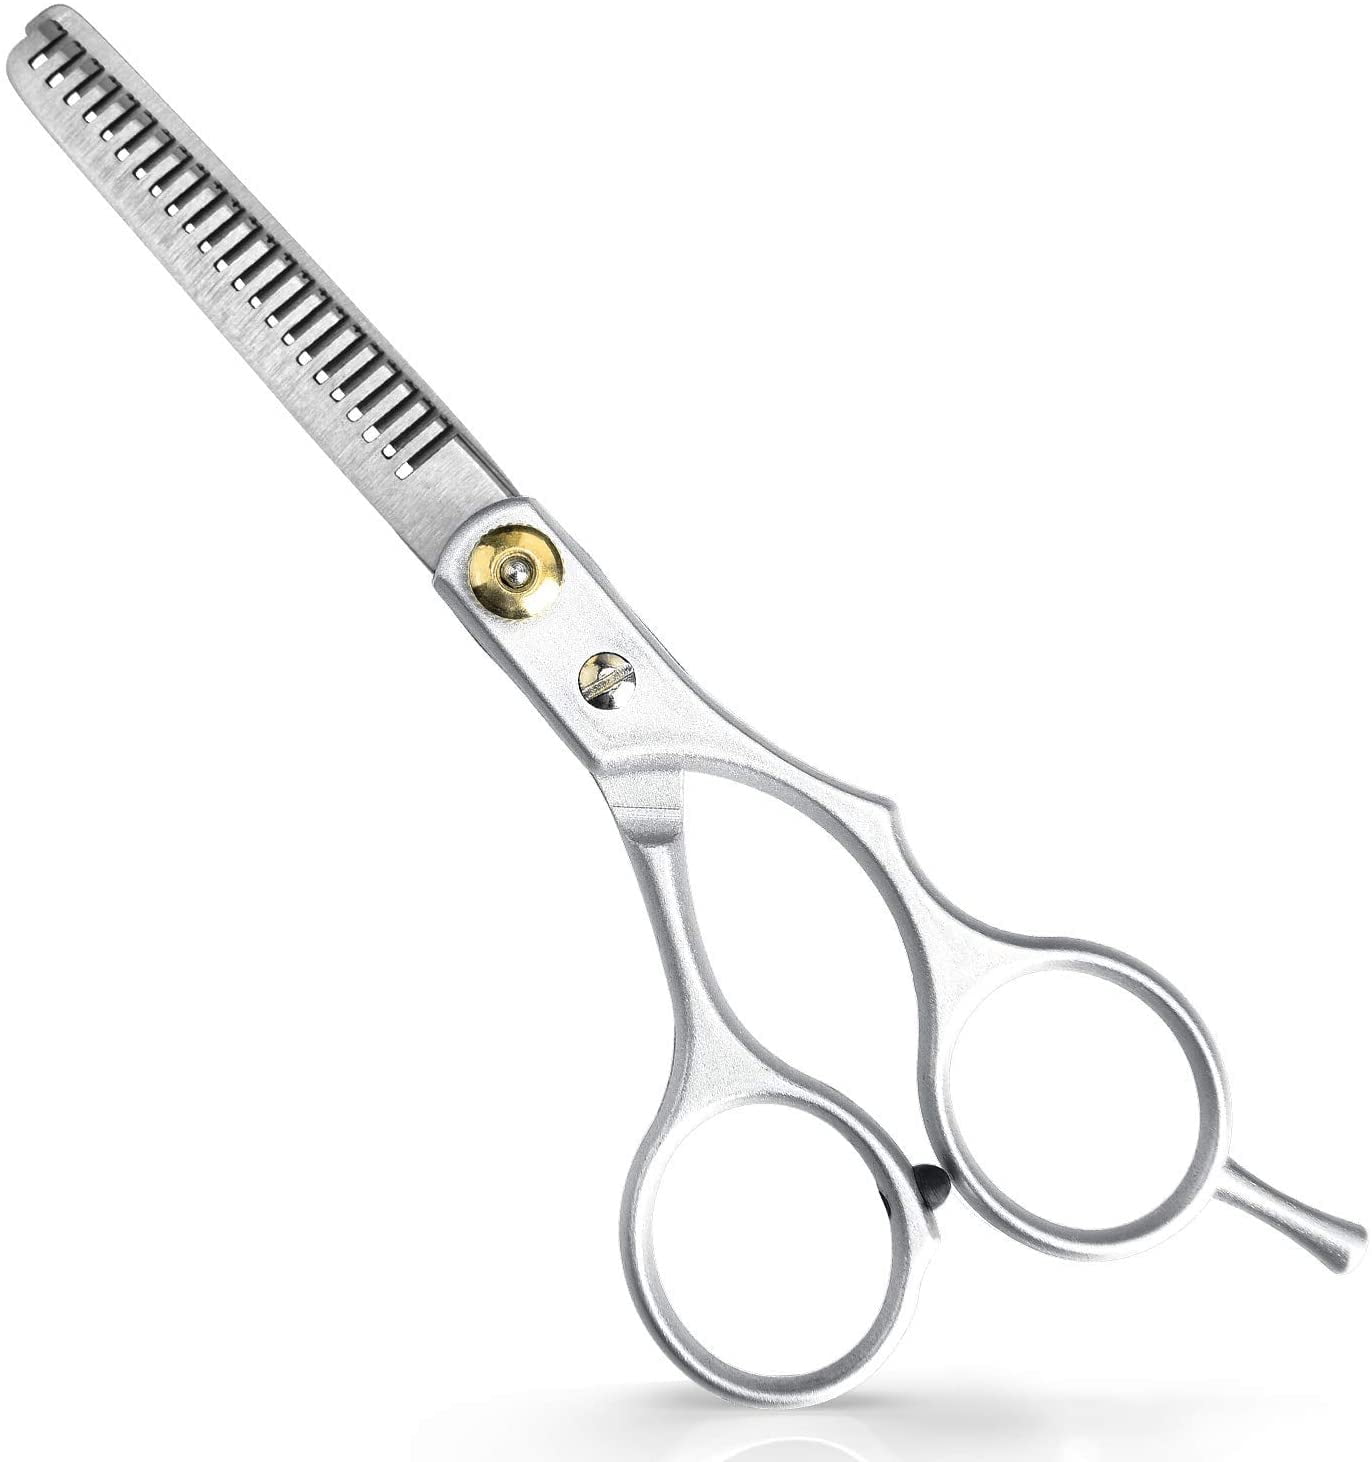 1pcs High Quality U Stainless Steel Shear Fish Line Scissors Sewing Scissor /Shear/Wig Extensions Tool - AliExpress